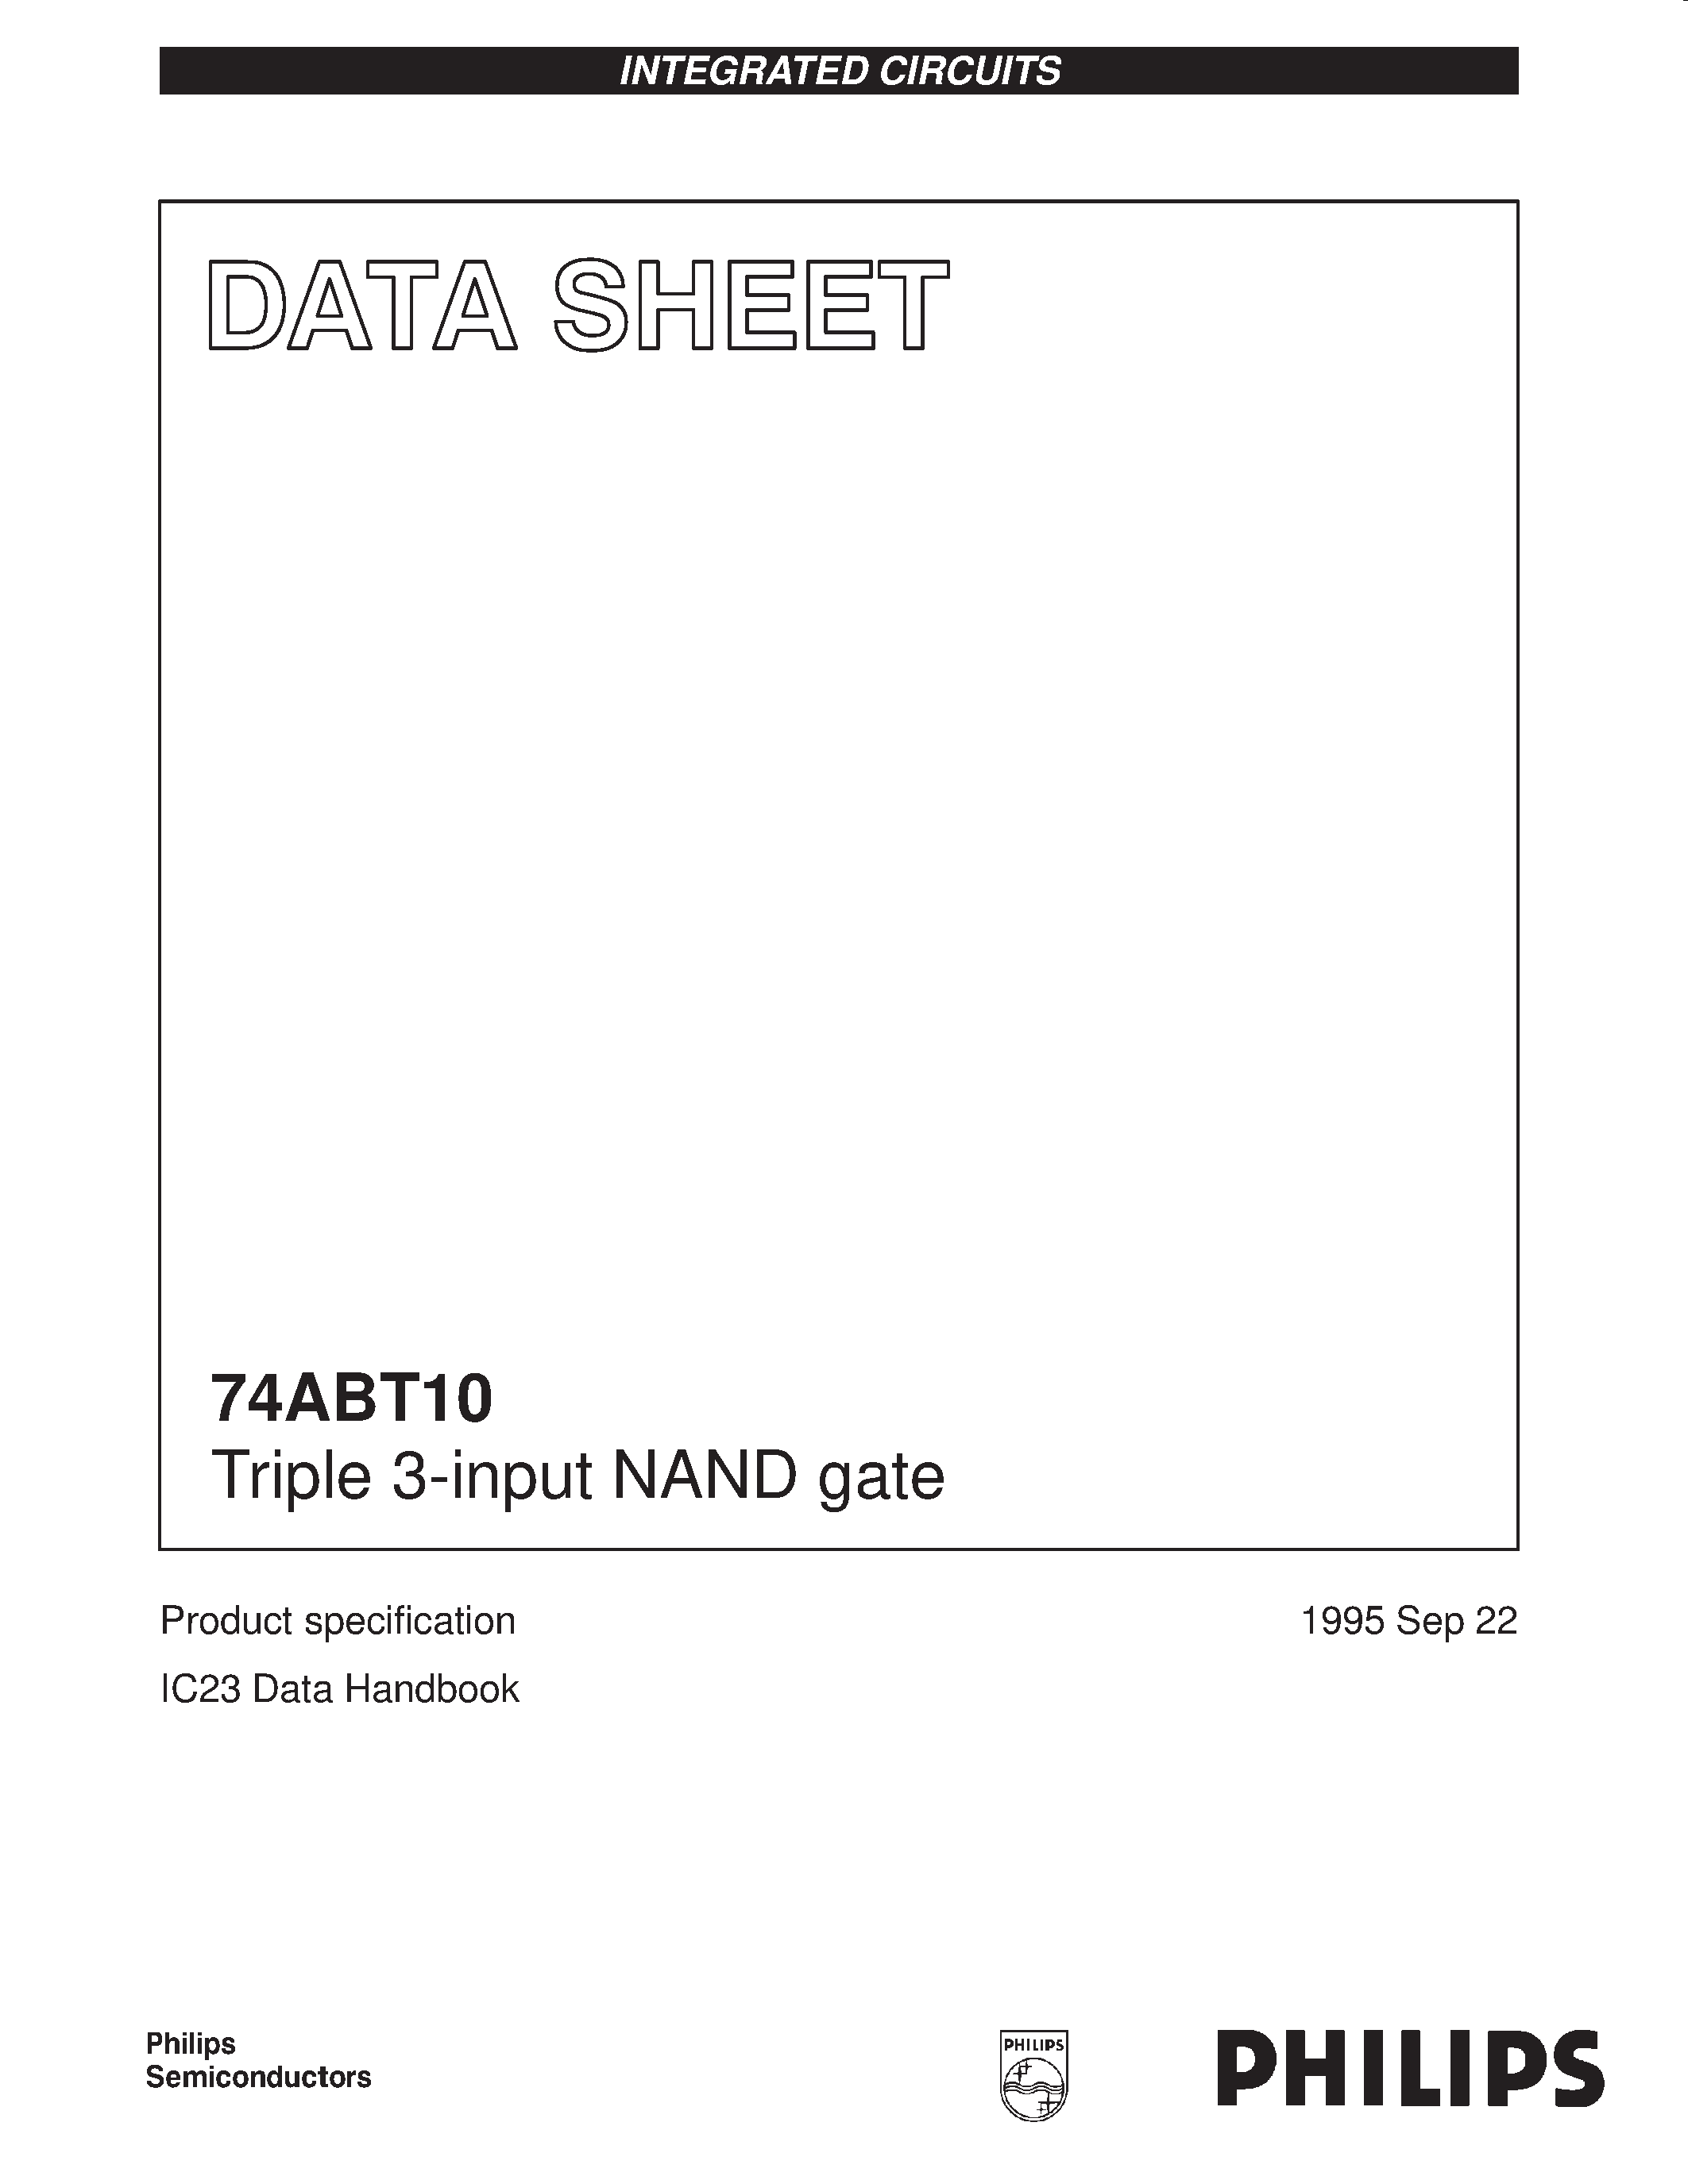 Datasheet 74ABT10PWDH - Triple 3-input NAND gate page 1